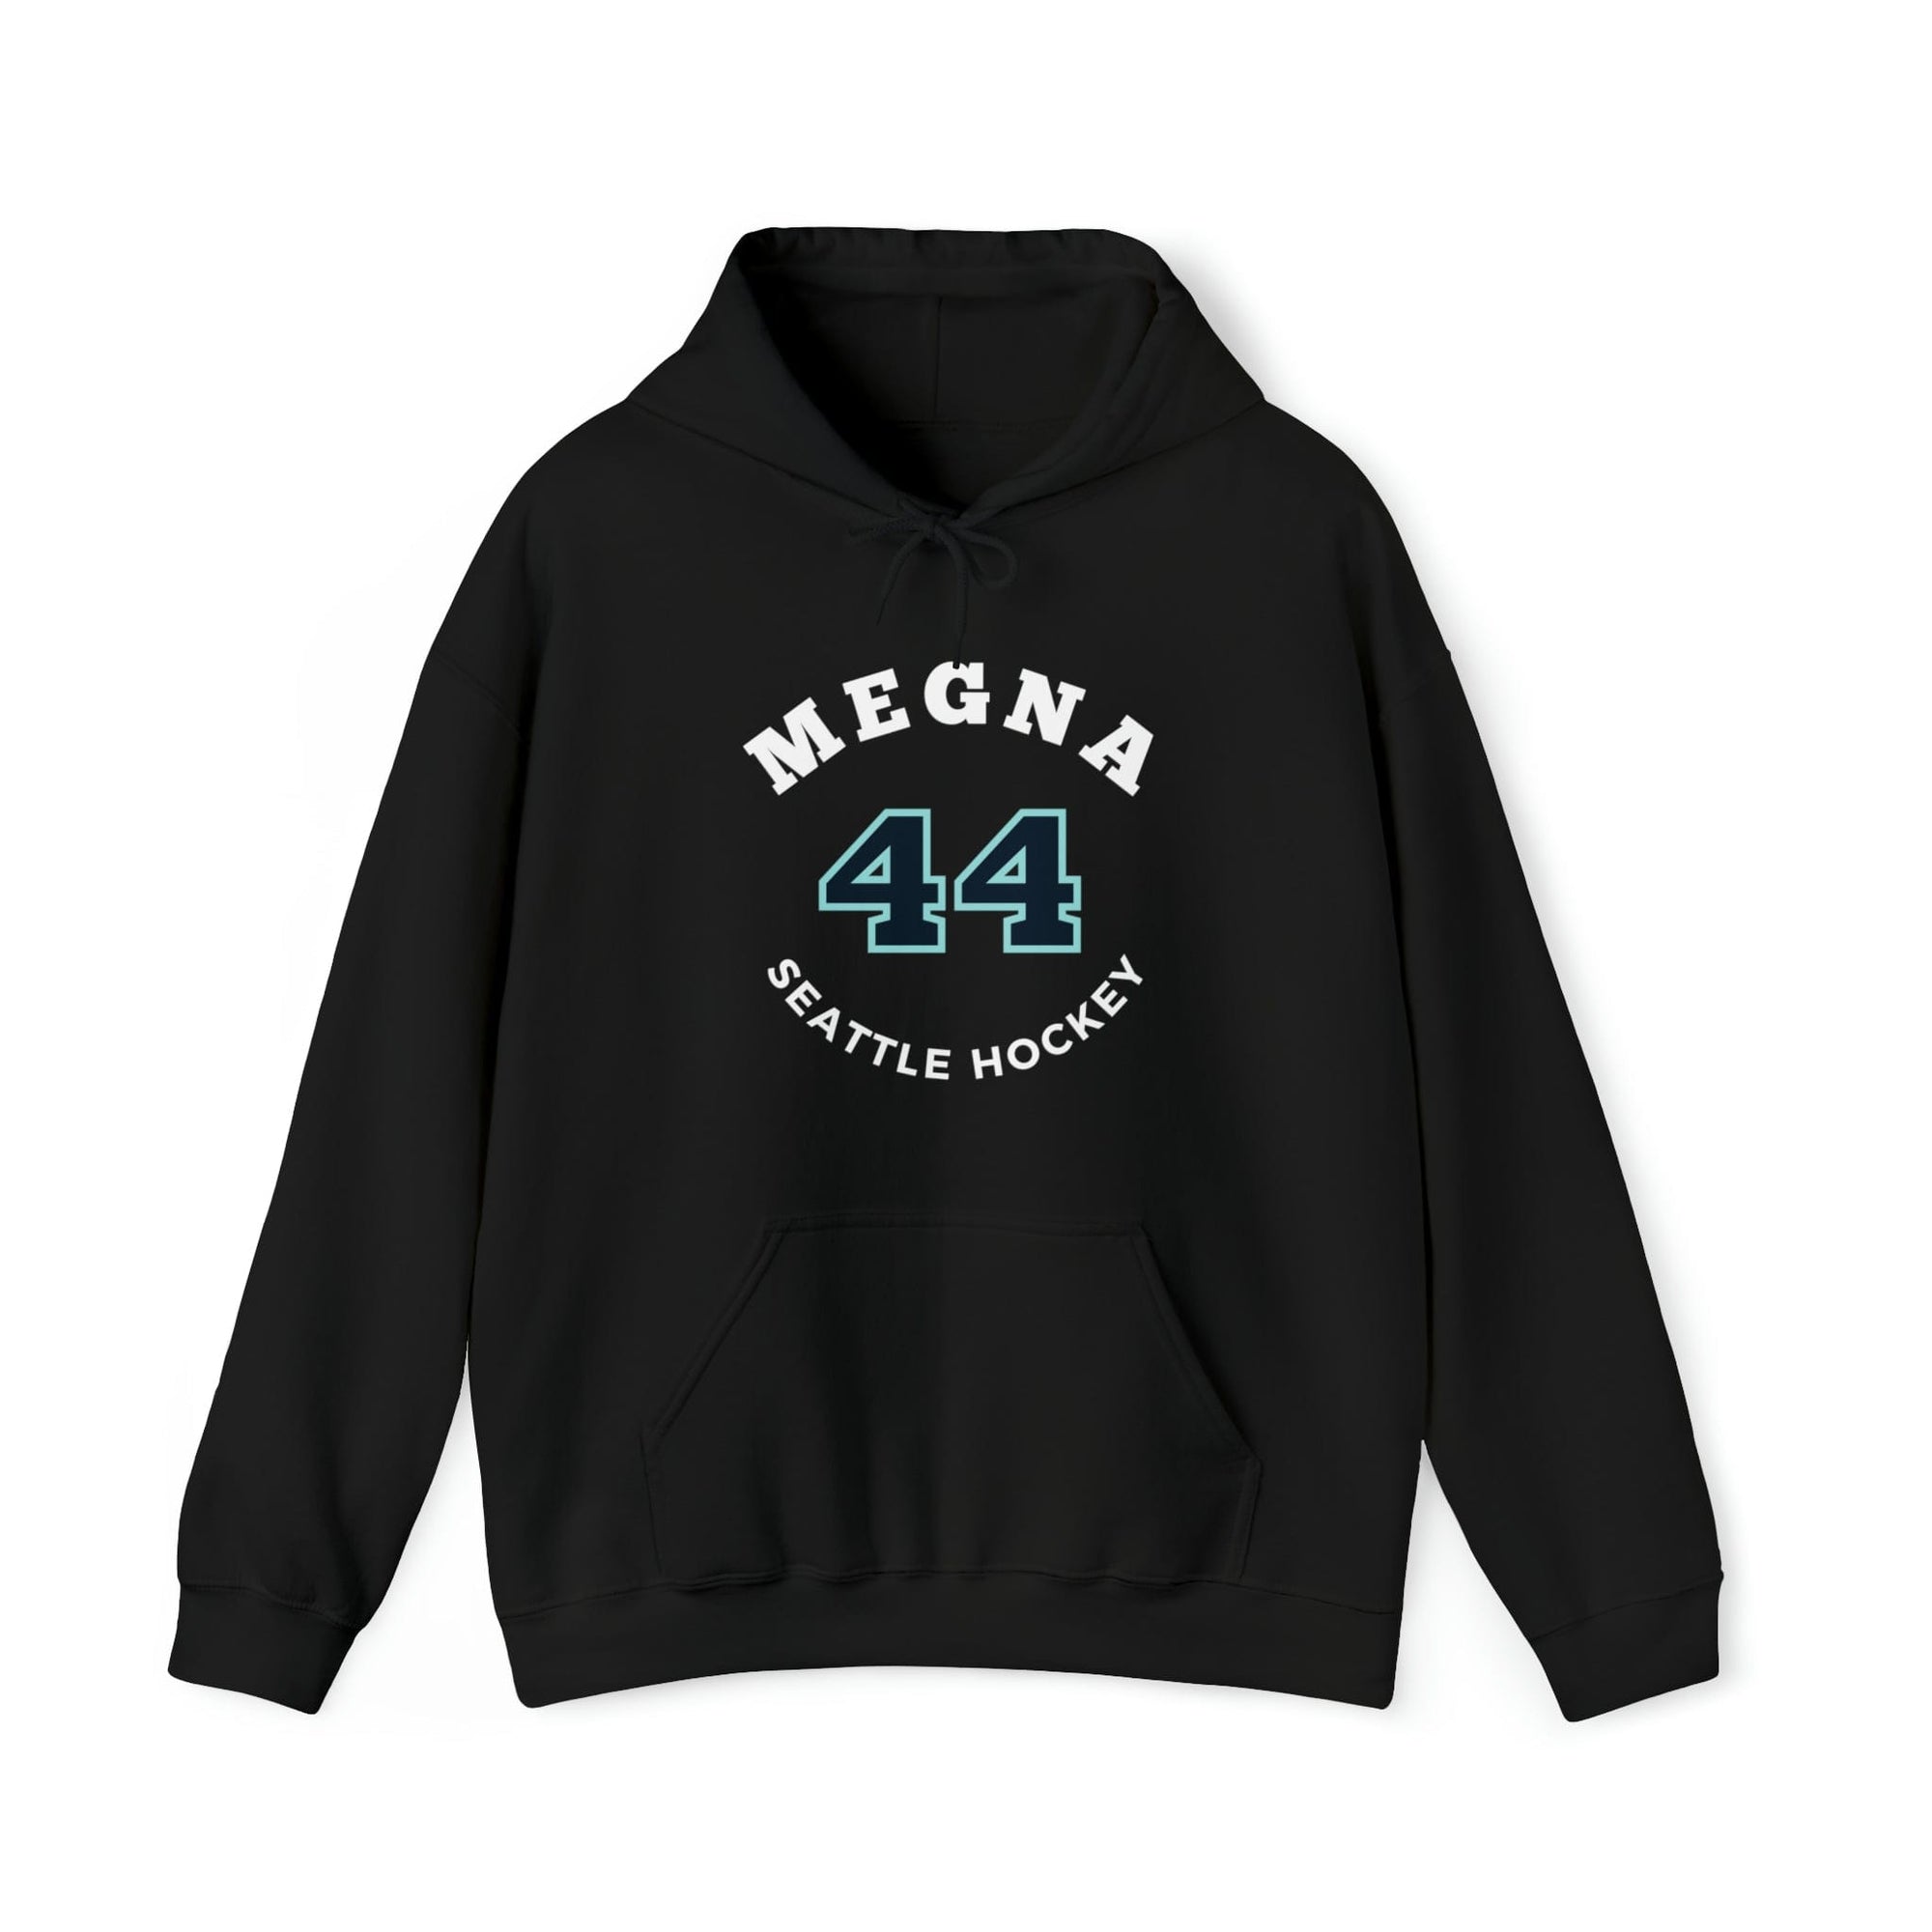 Hoodie Megna 44 Seattle Hockey Number Arch Design Unisex Hooded Sweatshirt